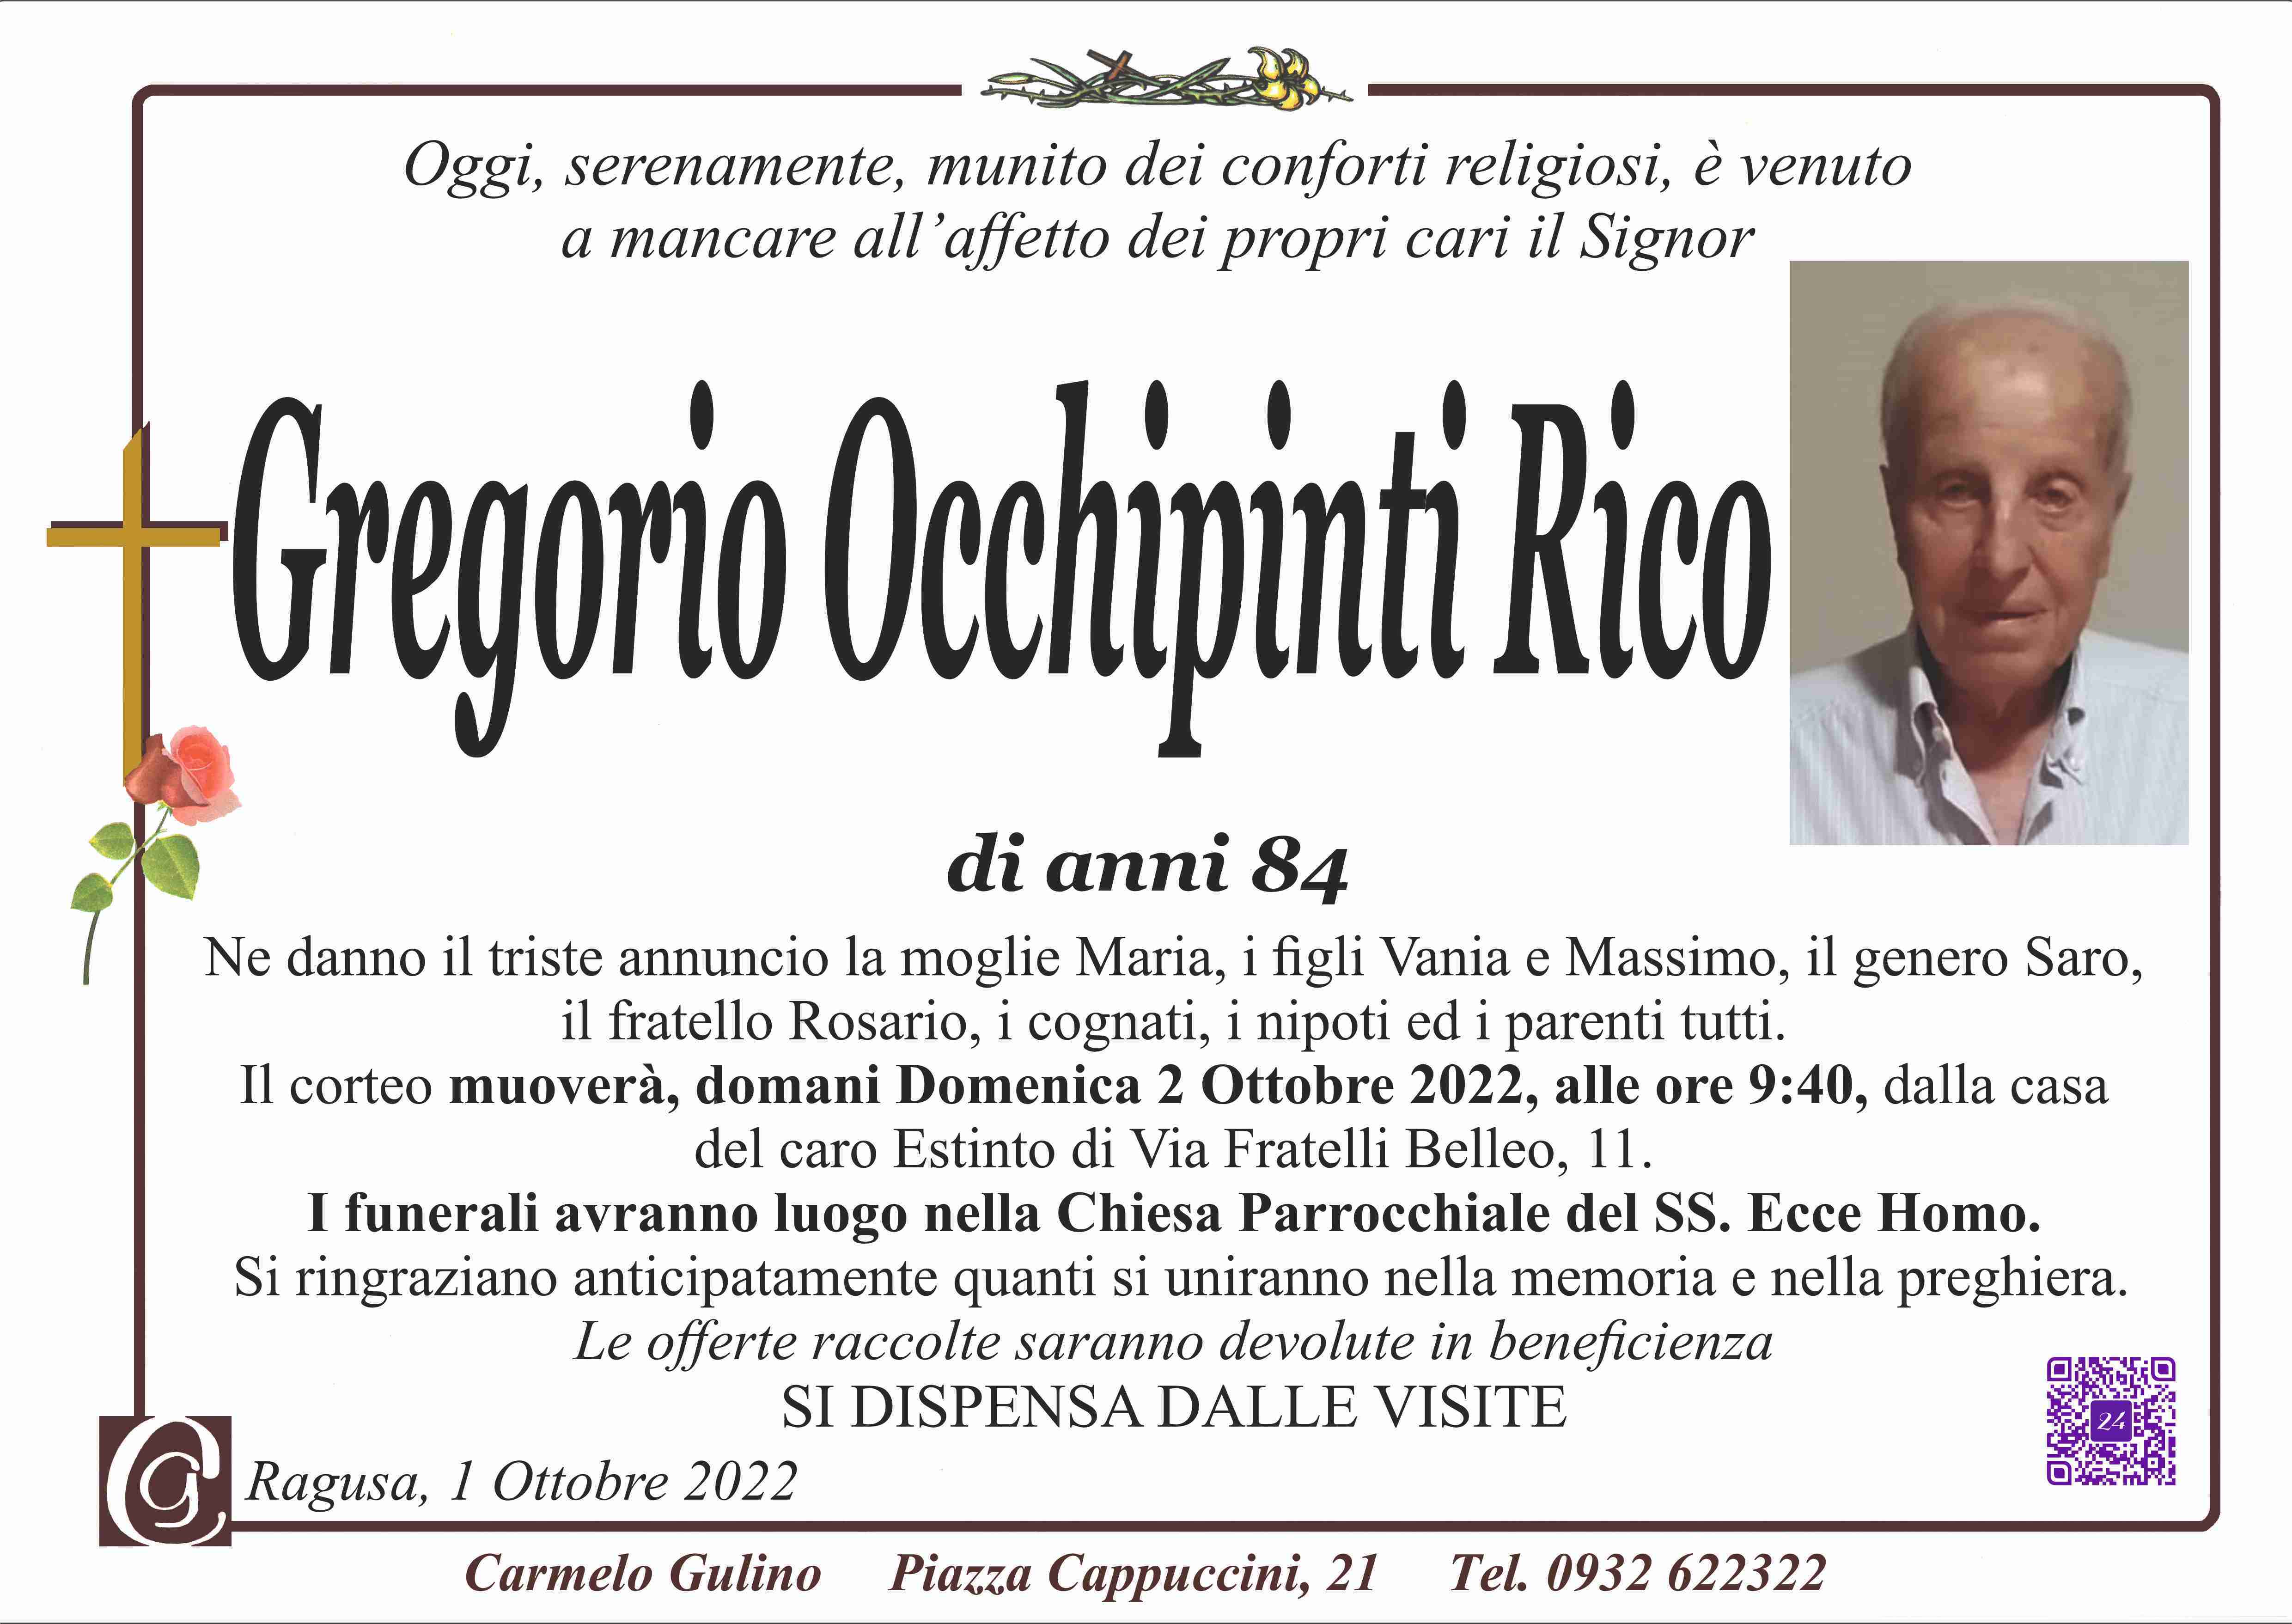 Gregorio Occhipinti